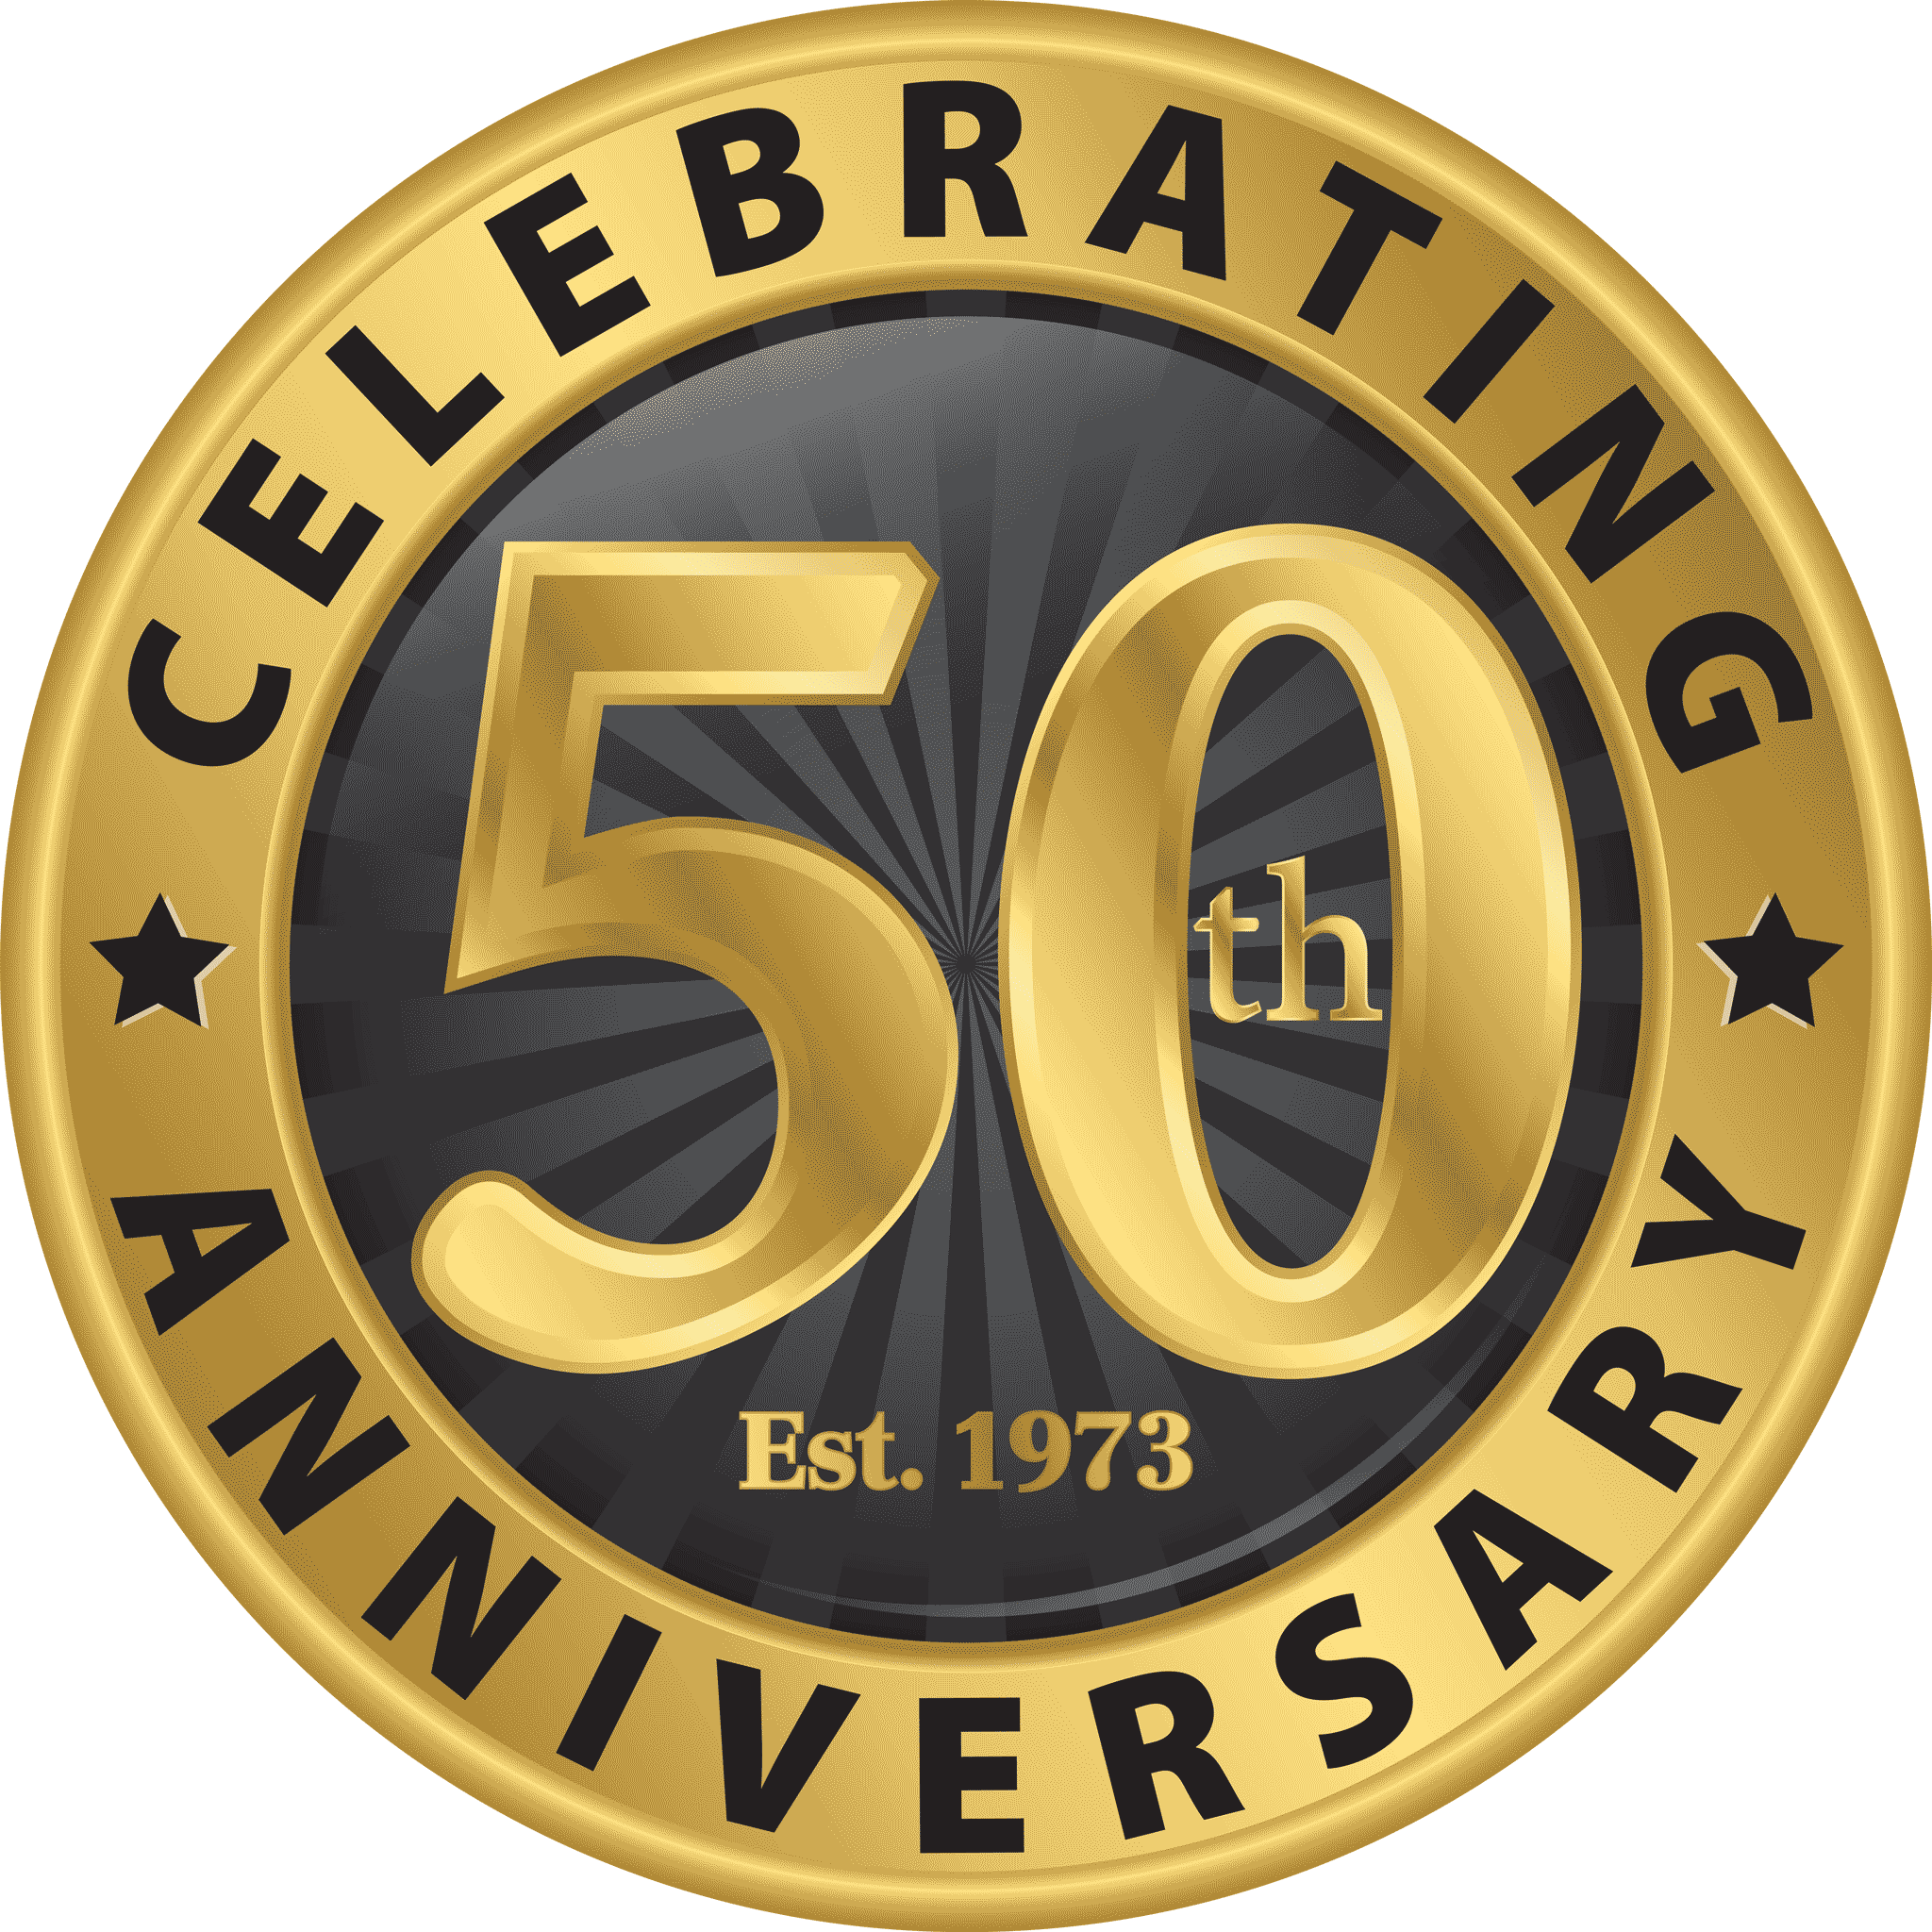 Celebratng 50 years